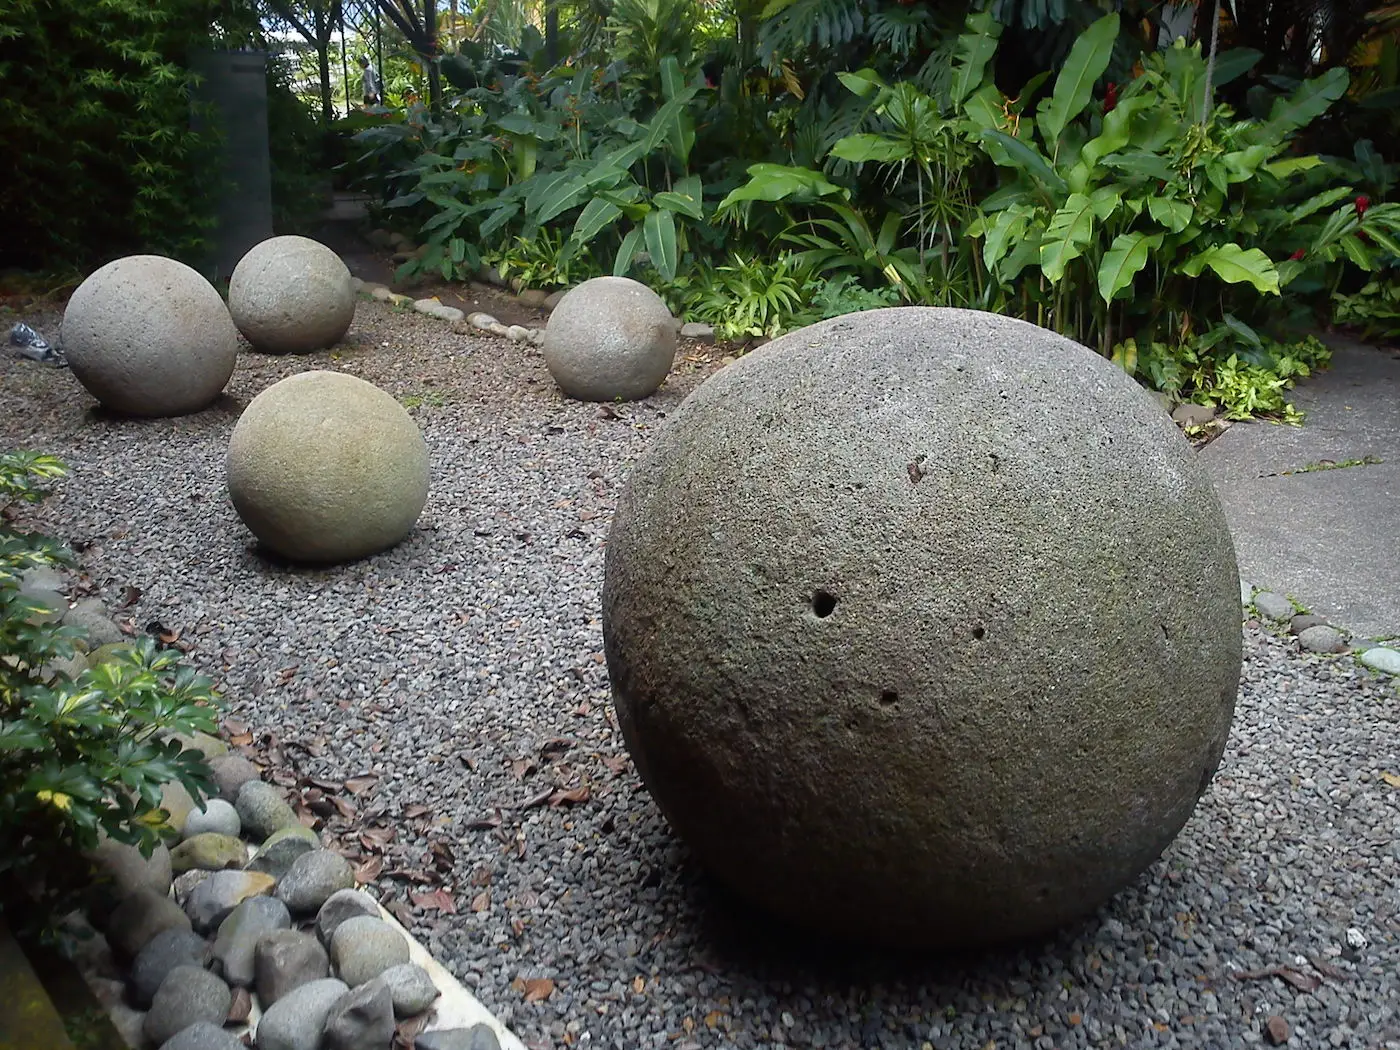 Perfectly round stone spheres, Costa Rica